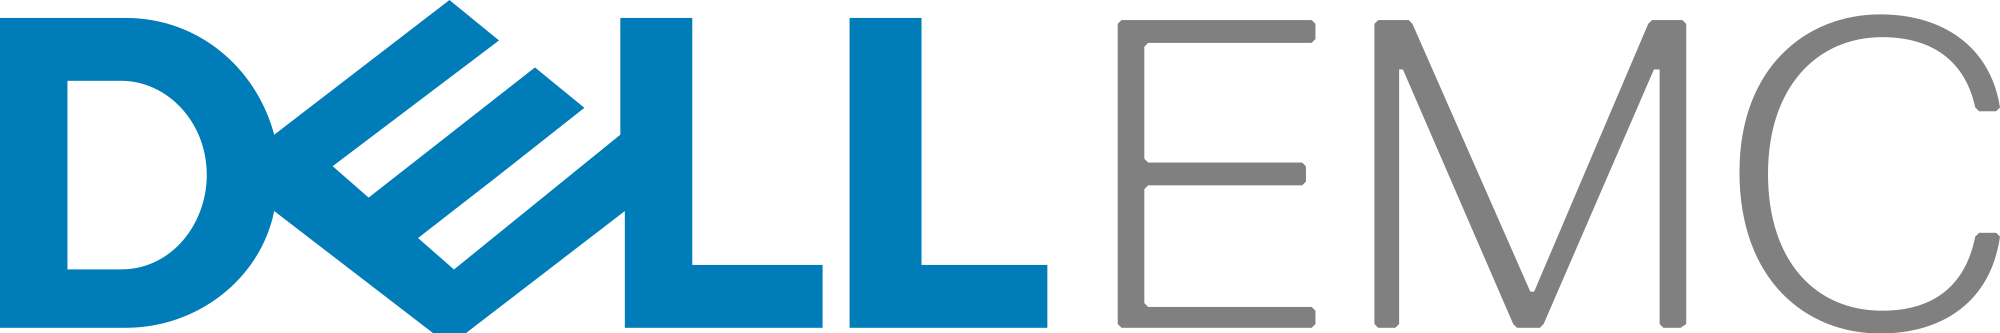 Dell Emc logotype